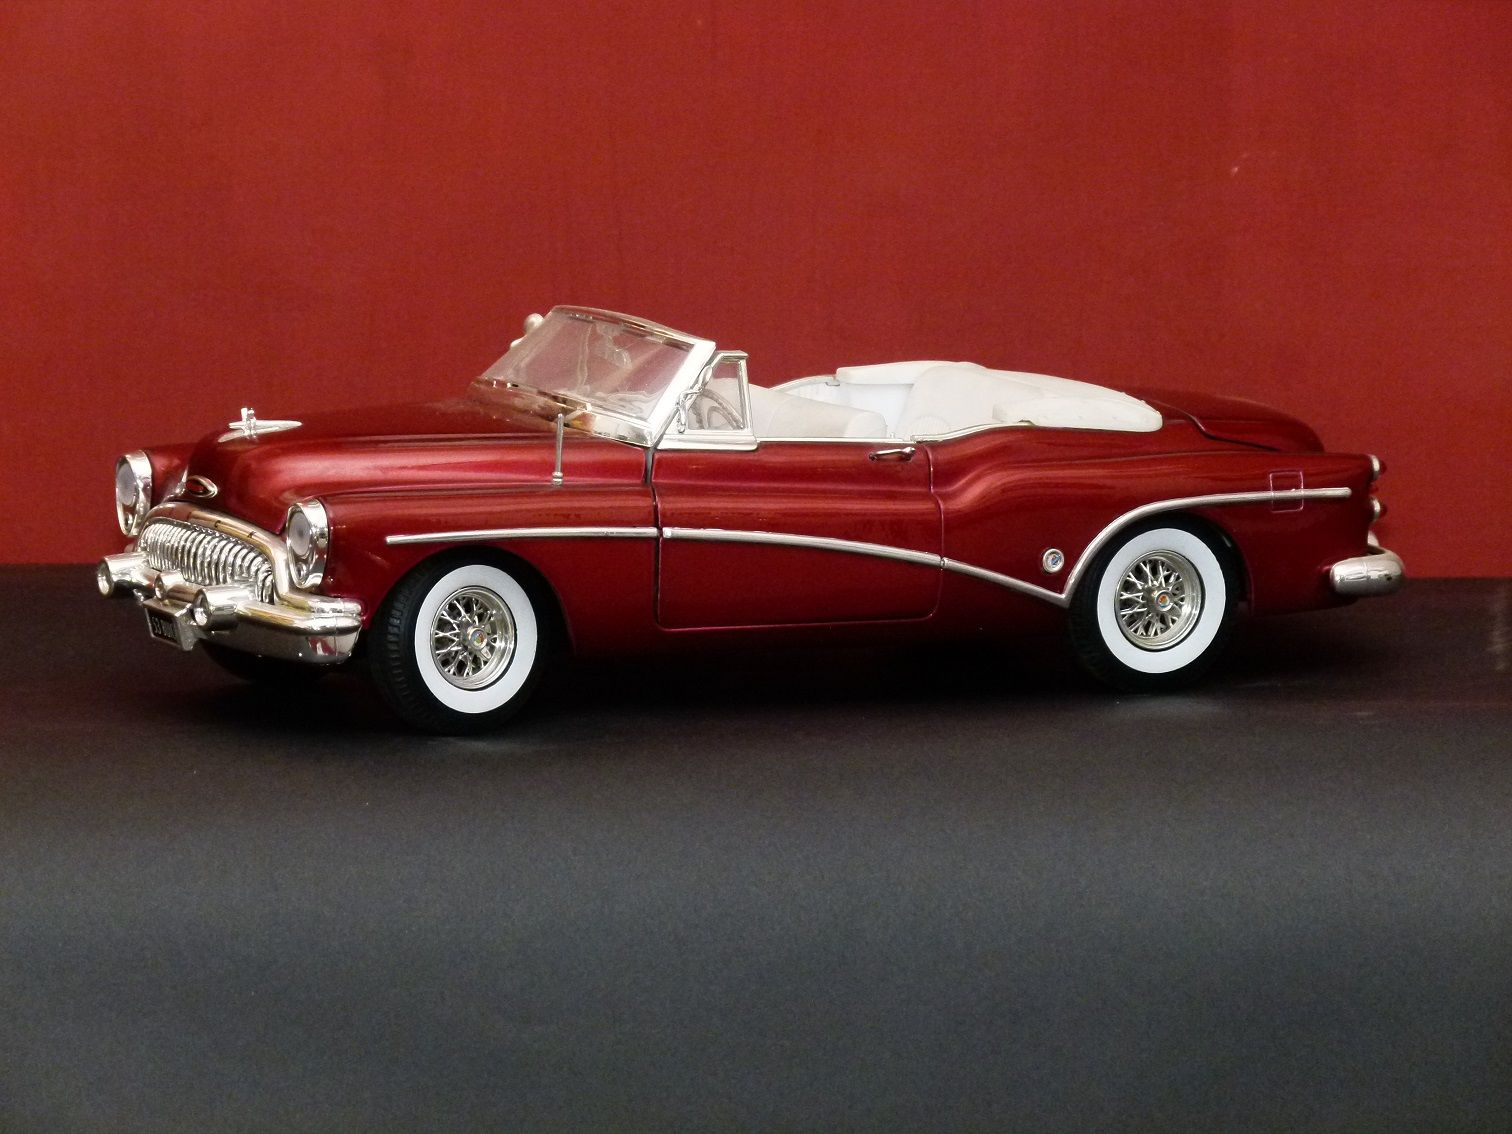 1953 Buick Skylark miniature diecast scale model cars